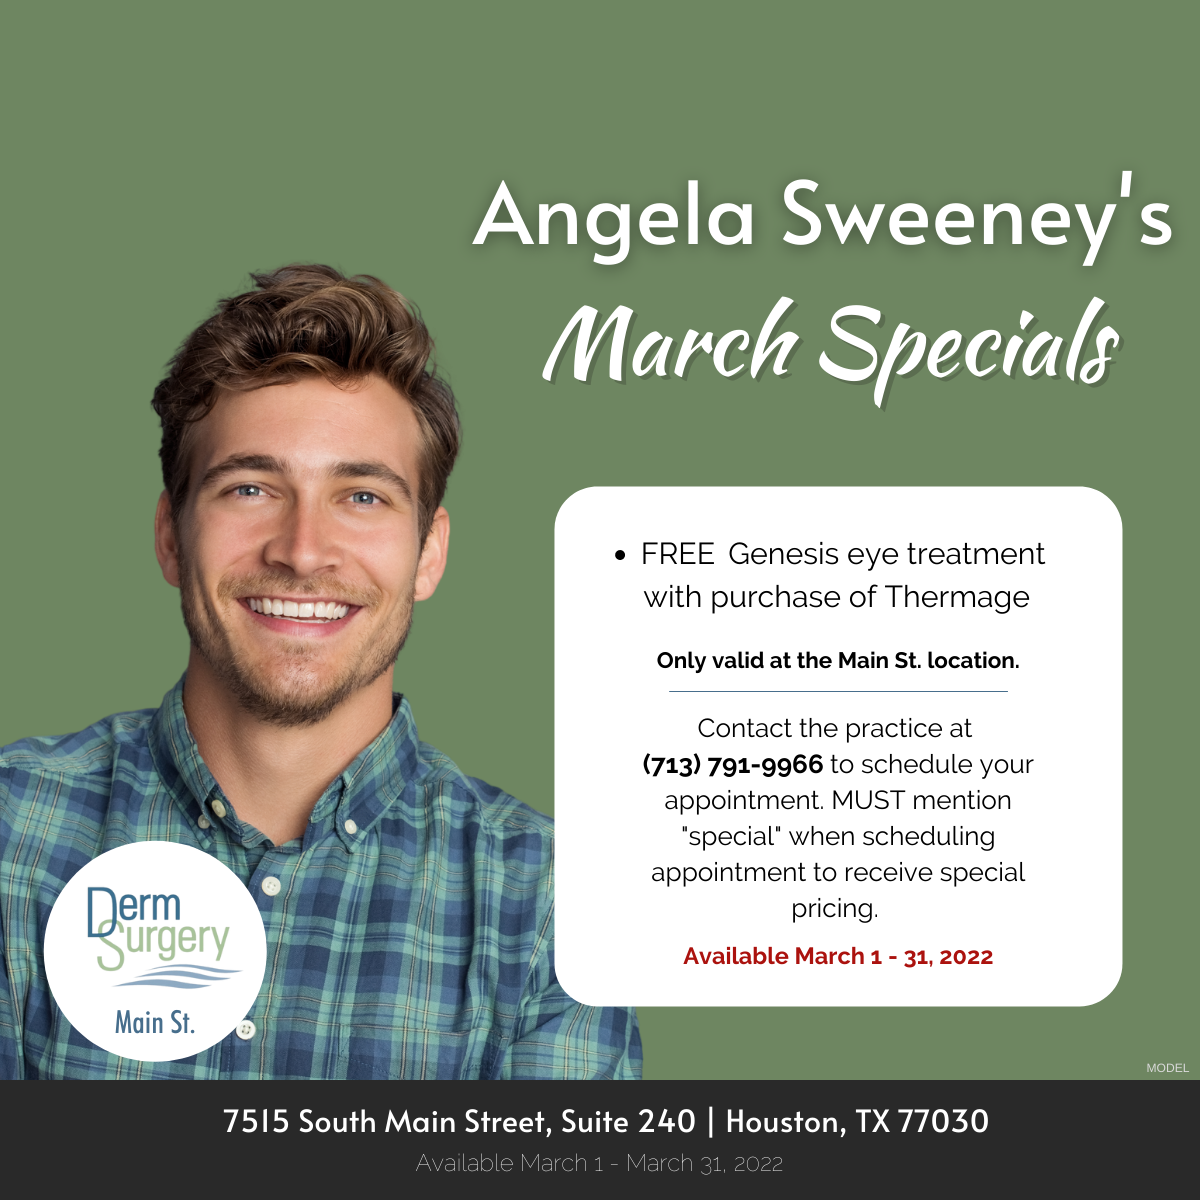 Angela Sweeney's March Specials